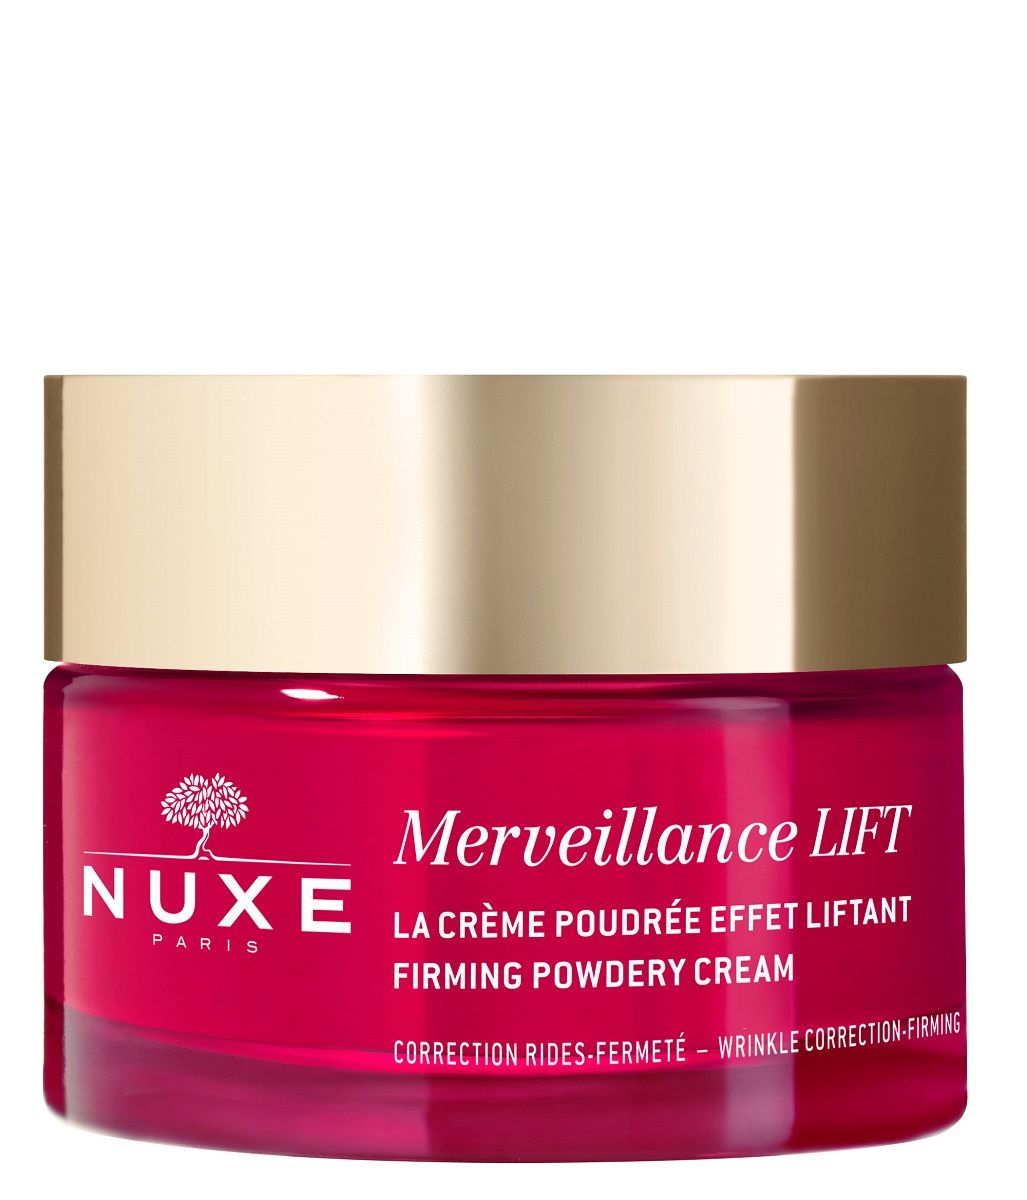 Nuxe Merveillance Lift крем для лица, 50 ml крем против морщин merveillance lift crema glow nuxe 50 мл